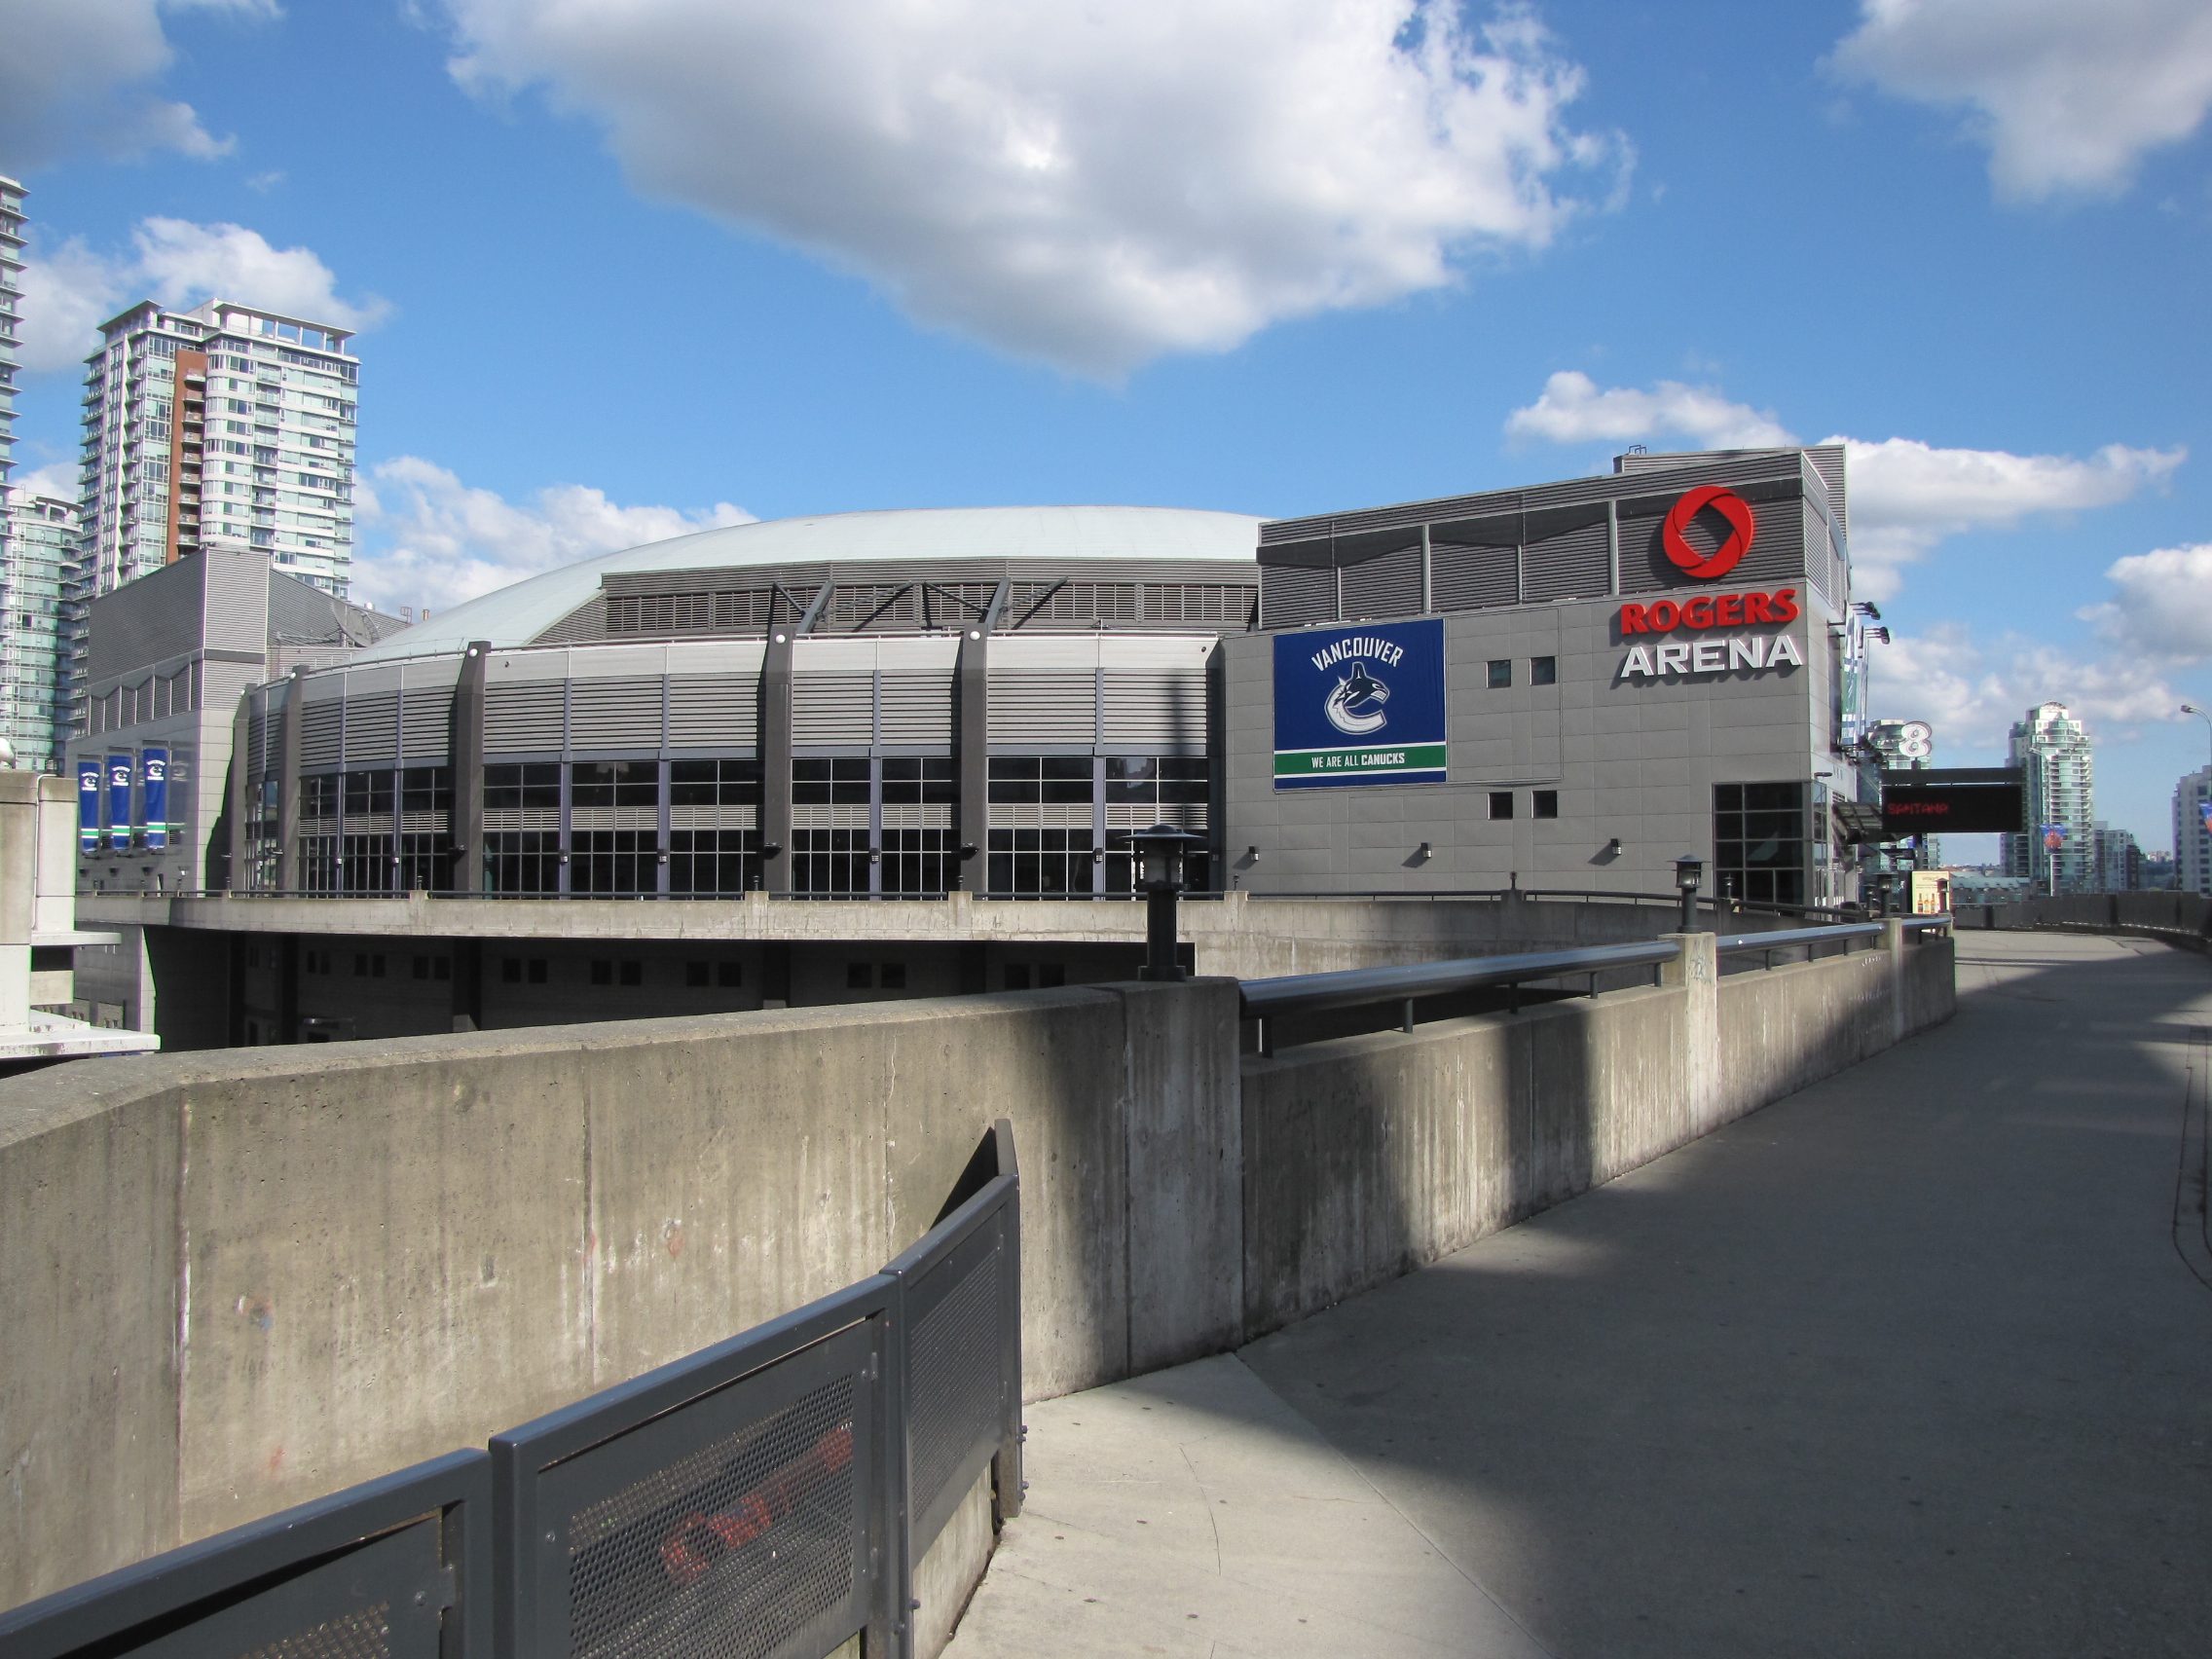 Vancouver Canucks vs Los Angeles Kings en Rogers Arena Tickets